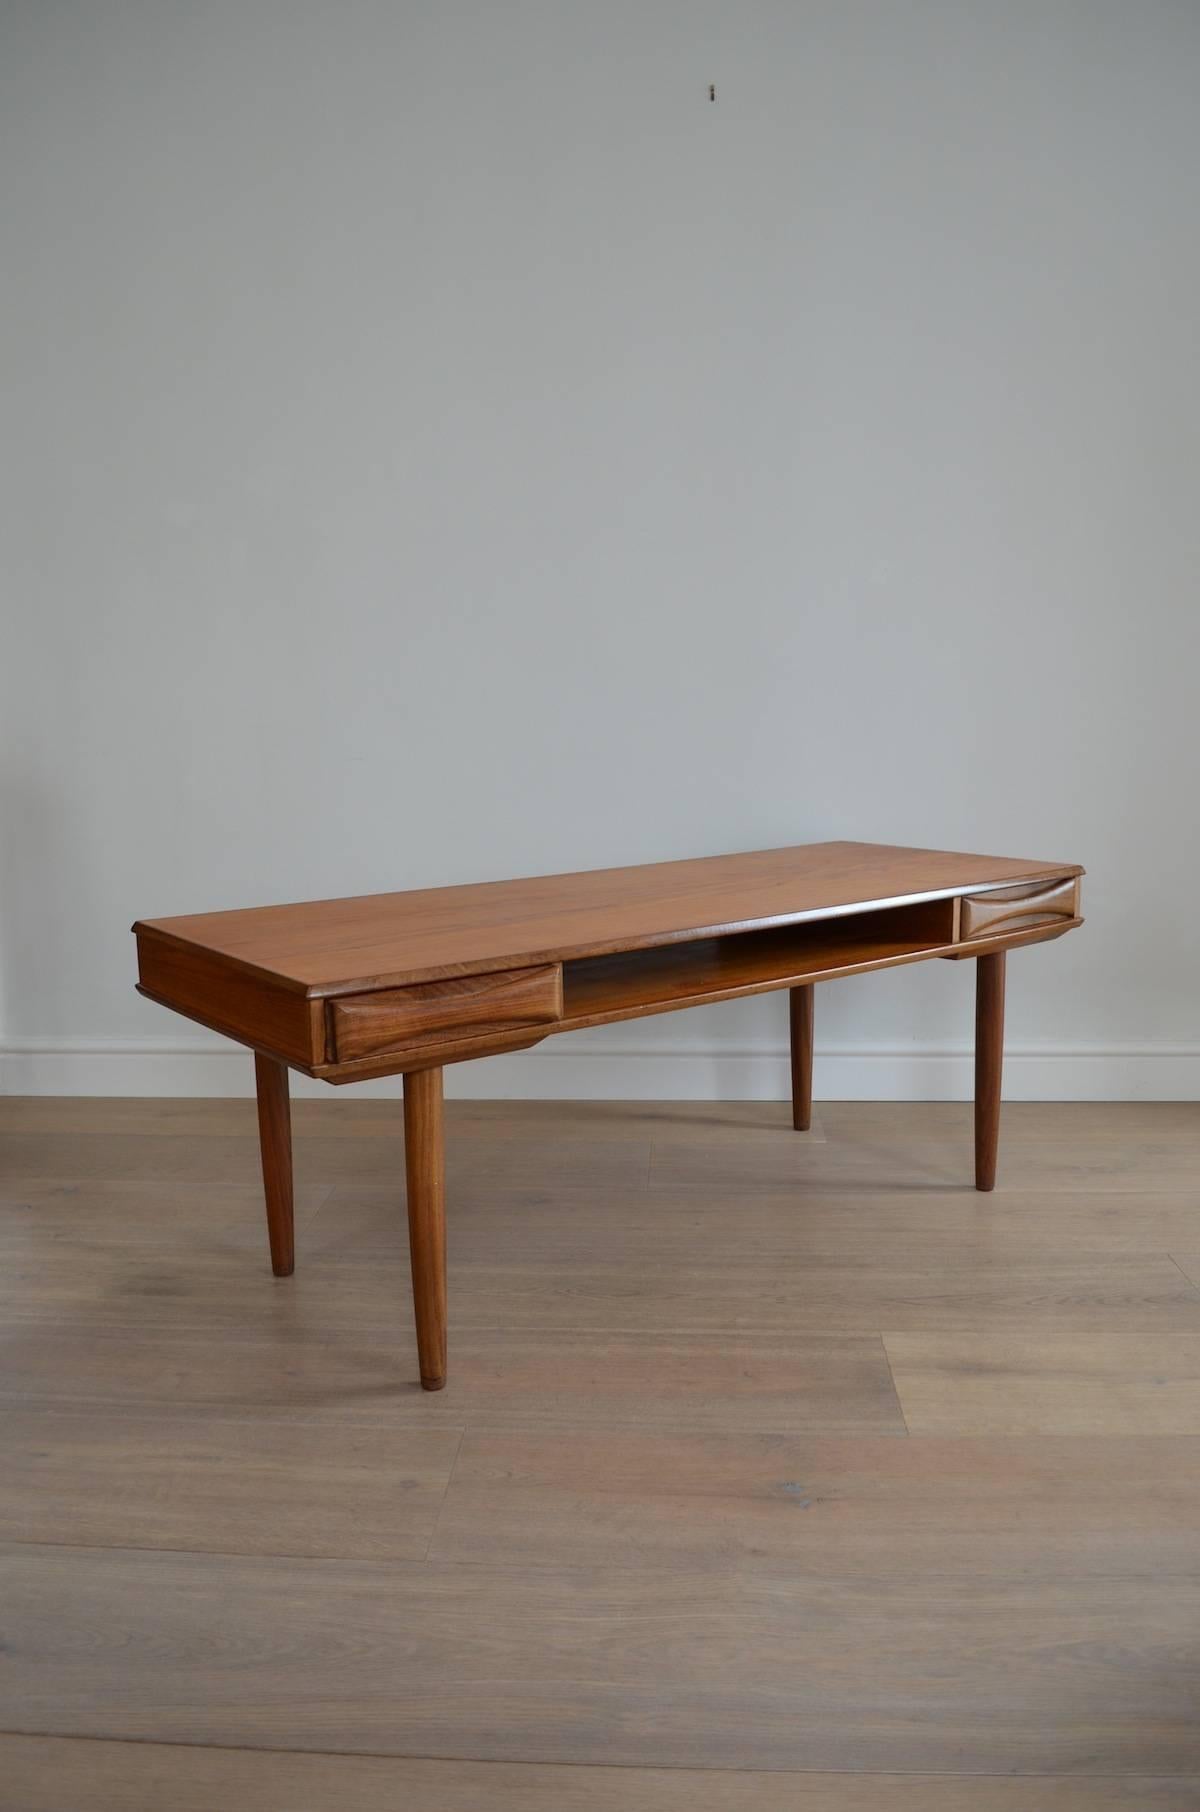 20th Century Arne Vodder Style Danish Teak Coffee Table, 1950s For Sale